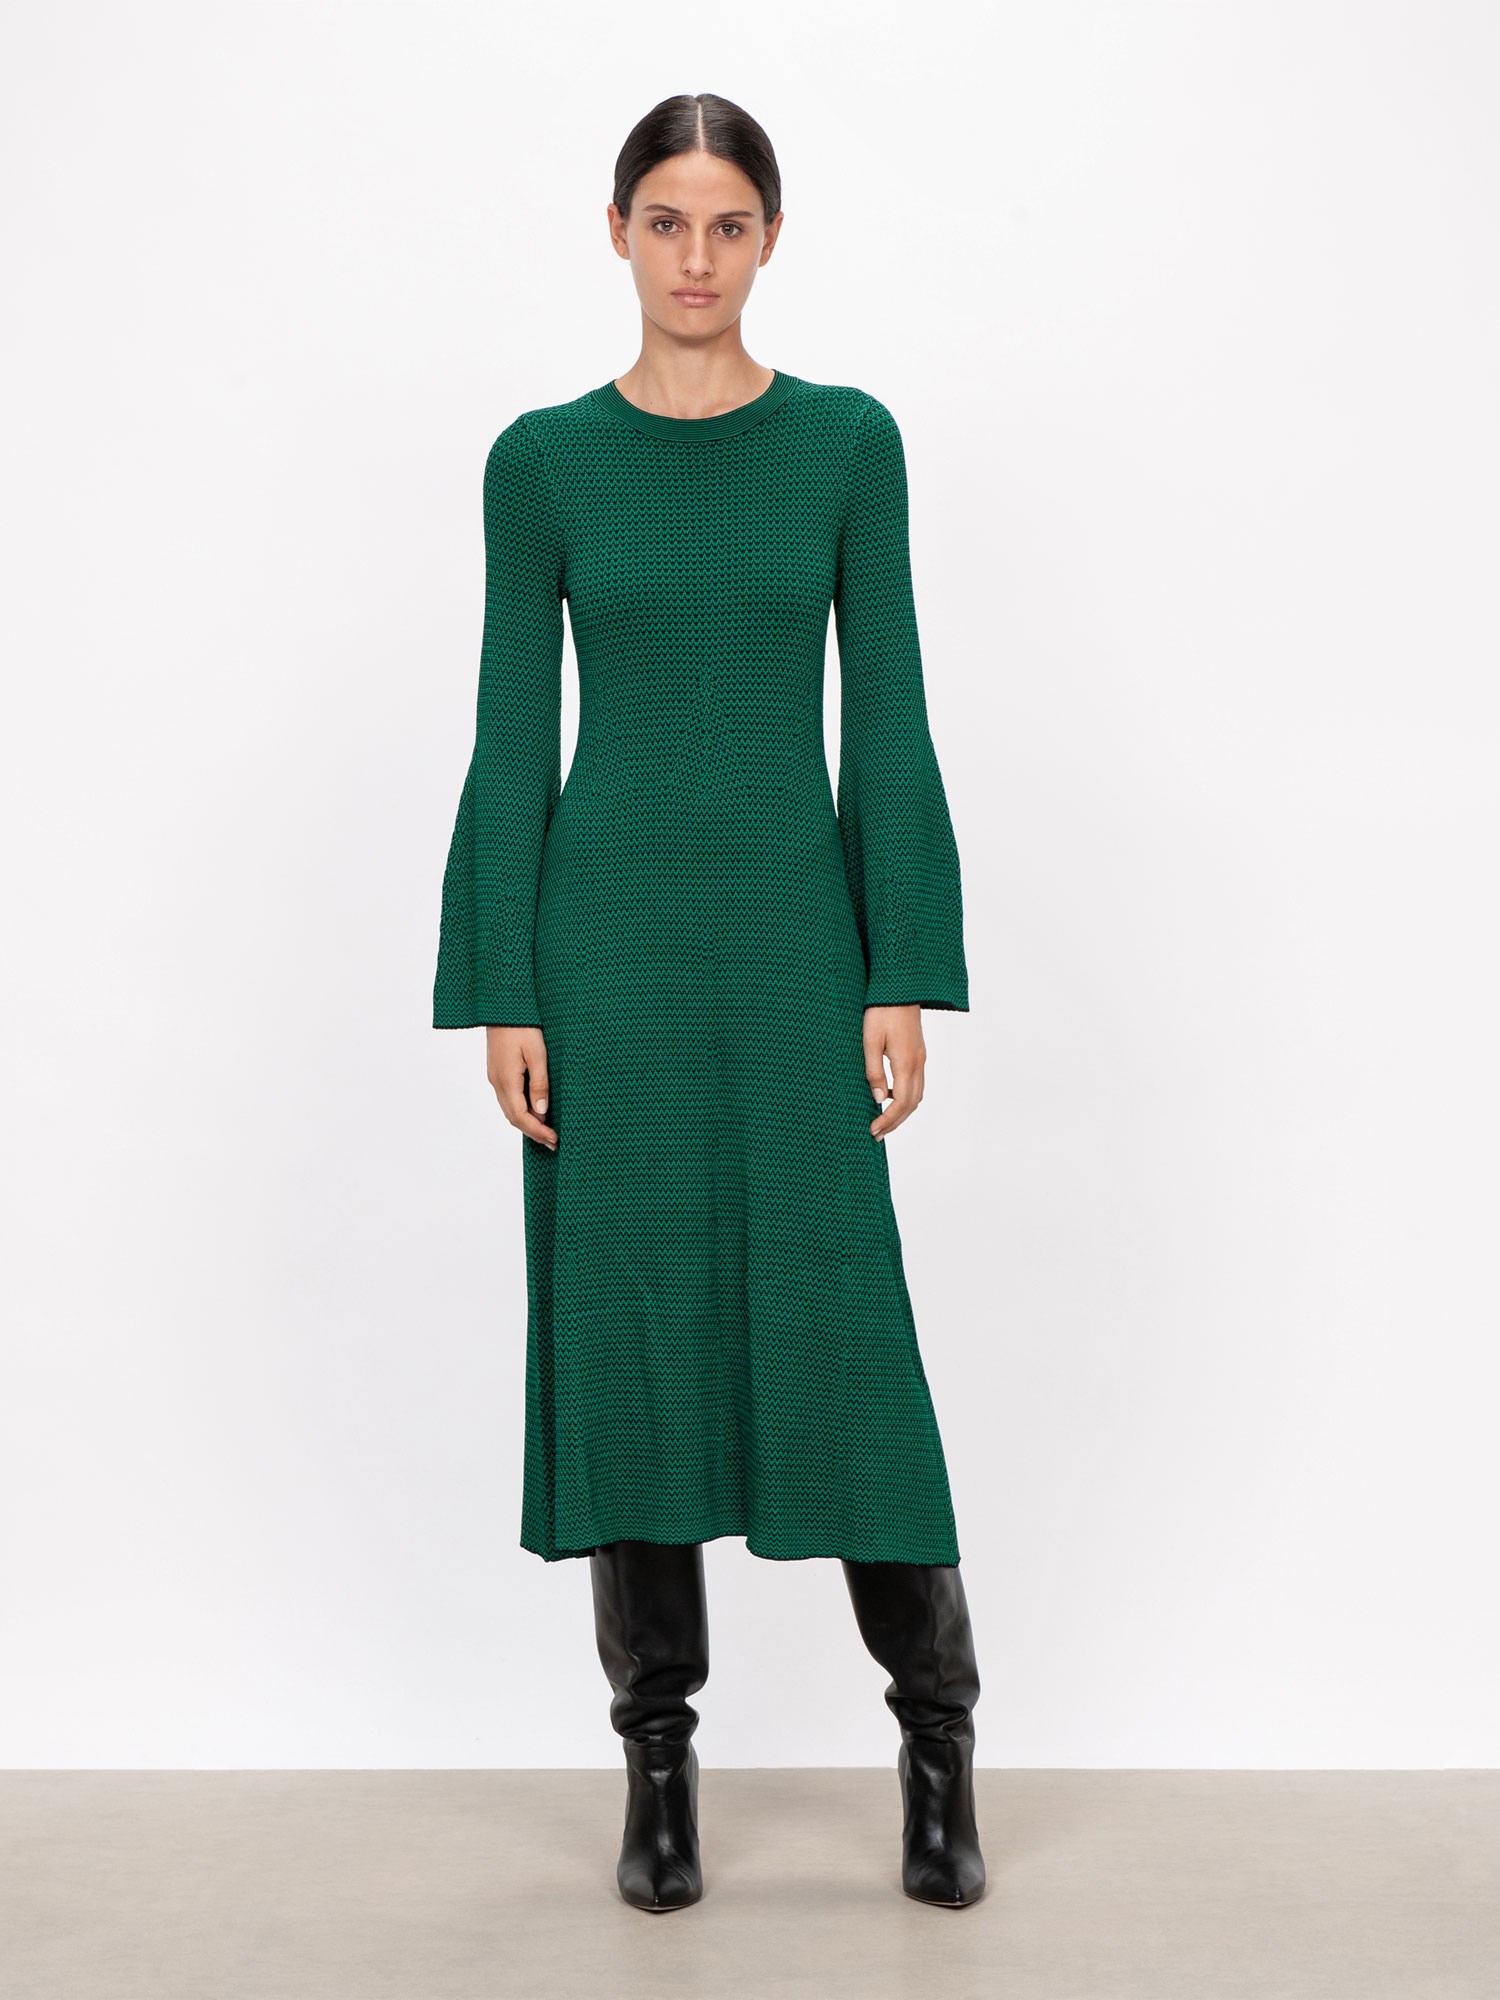 Zig Zag Stripe Knit Dress | Buy New Arrivals Online - Veronika Maine